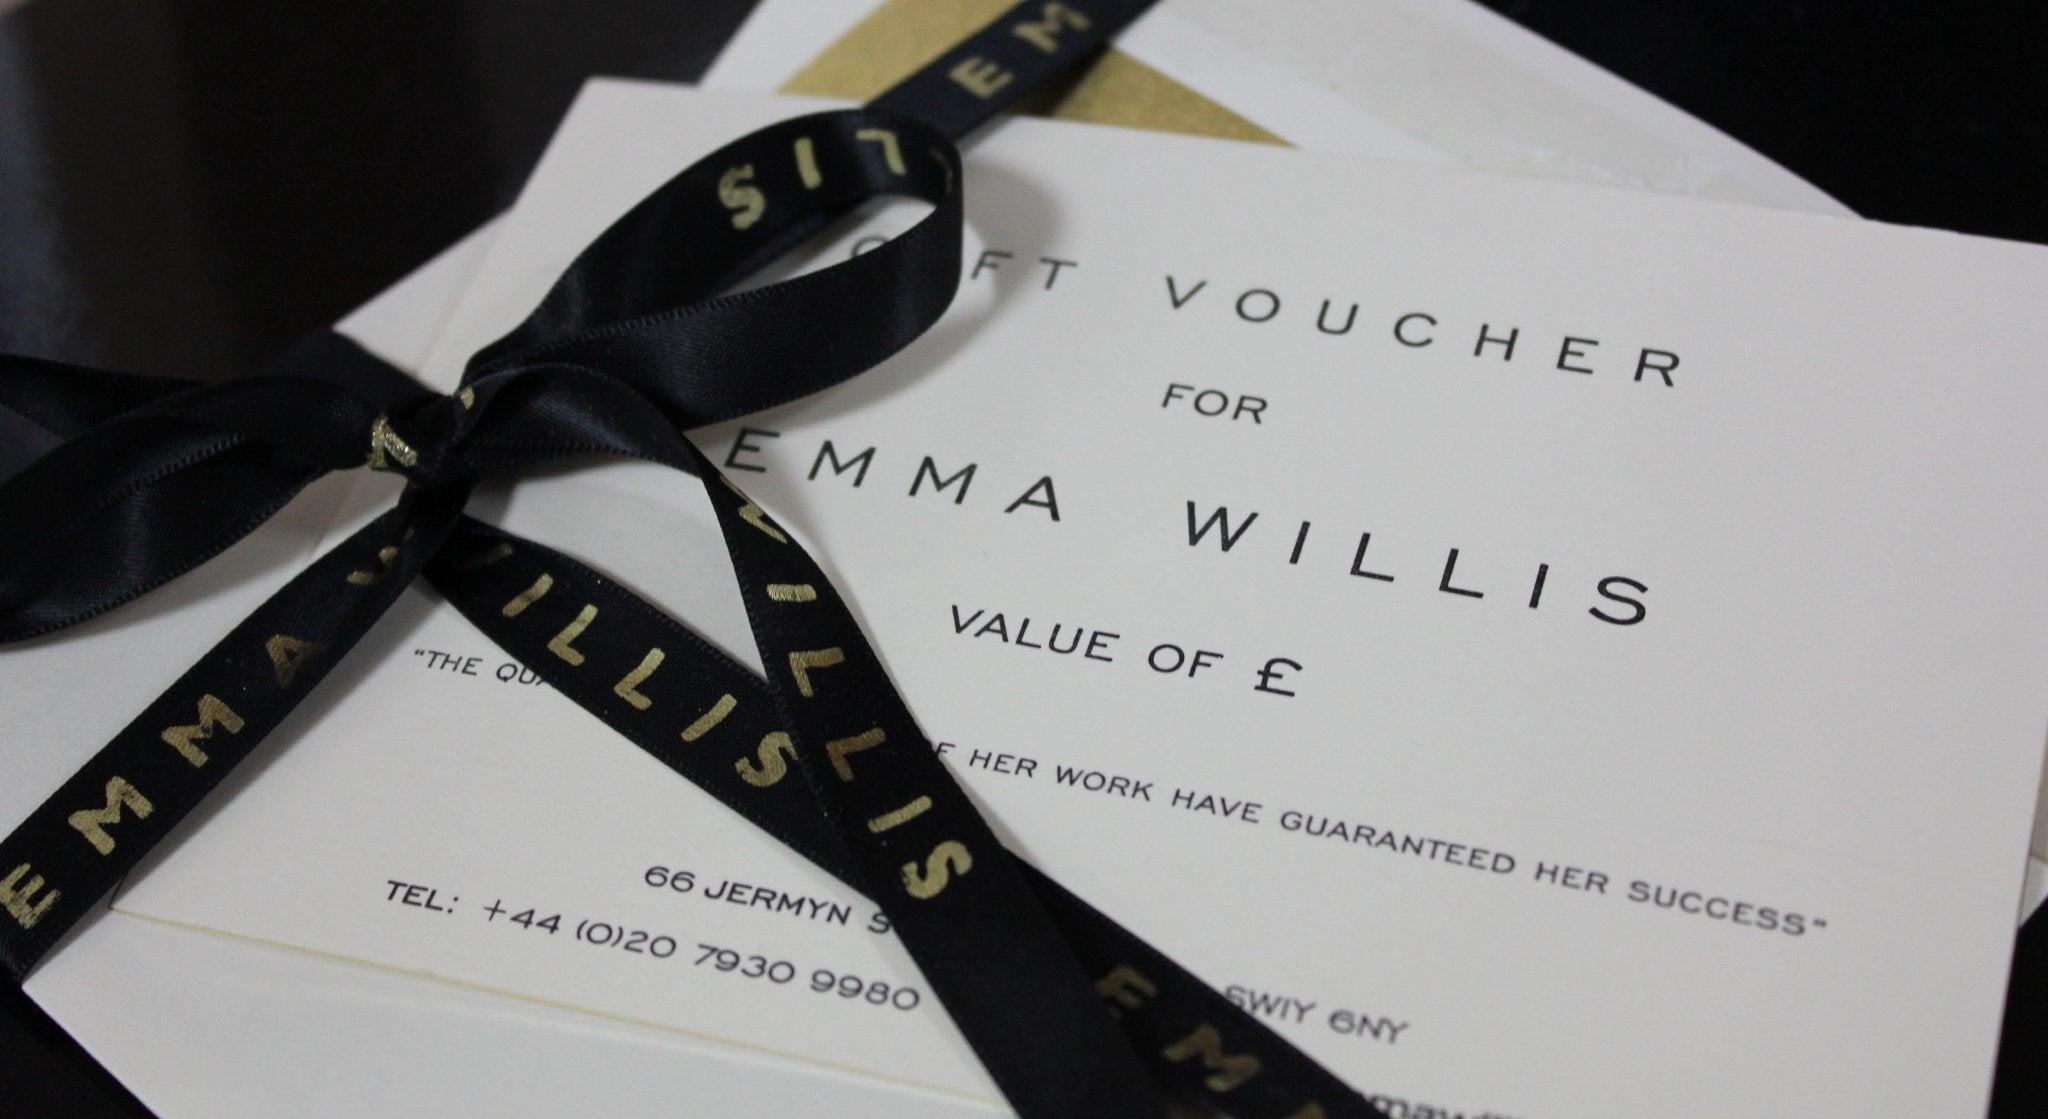 Emma Willis Gift Voucher - Emailer - Emma Willis